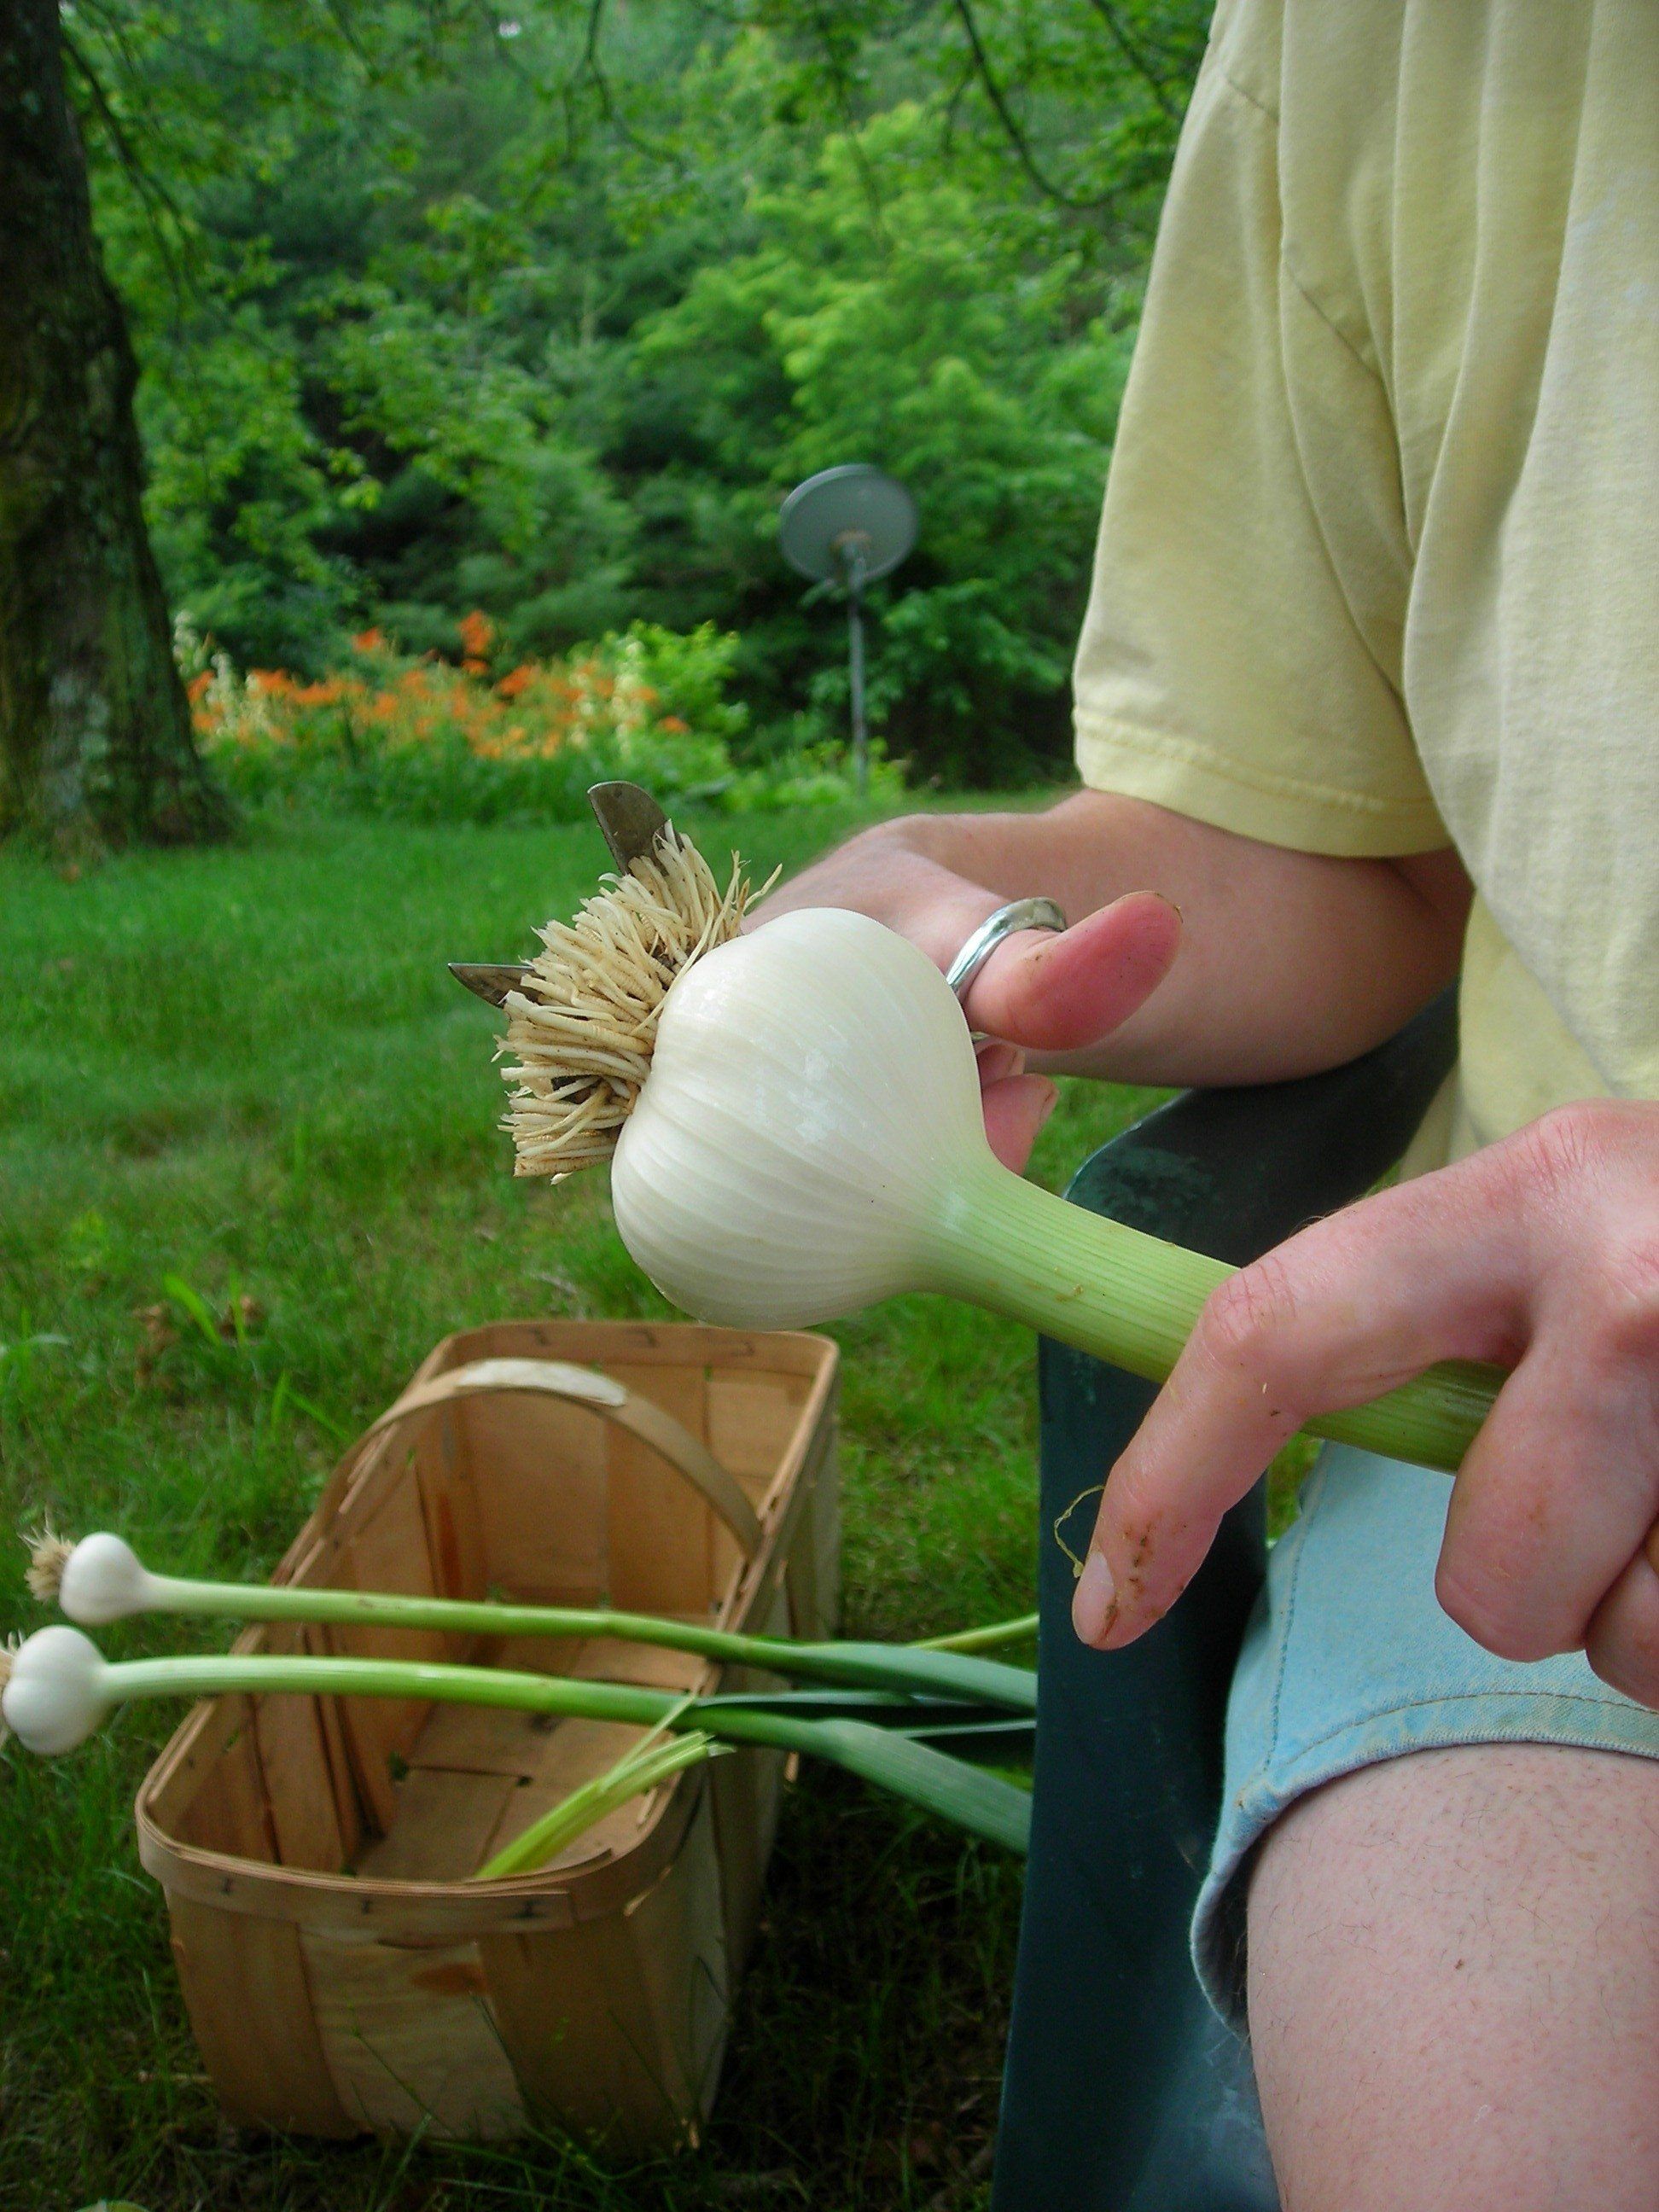 Next Happening: We have fresh garlic!